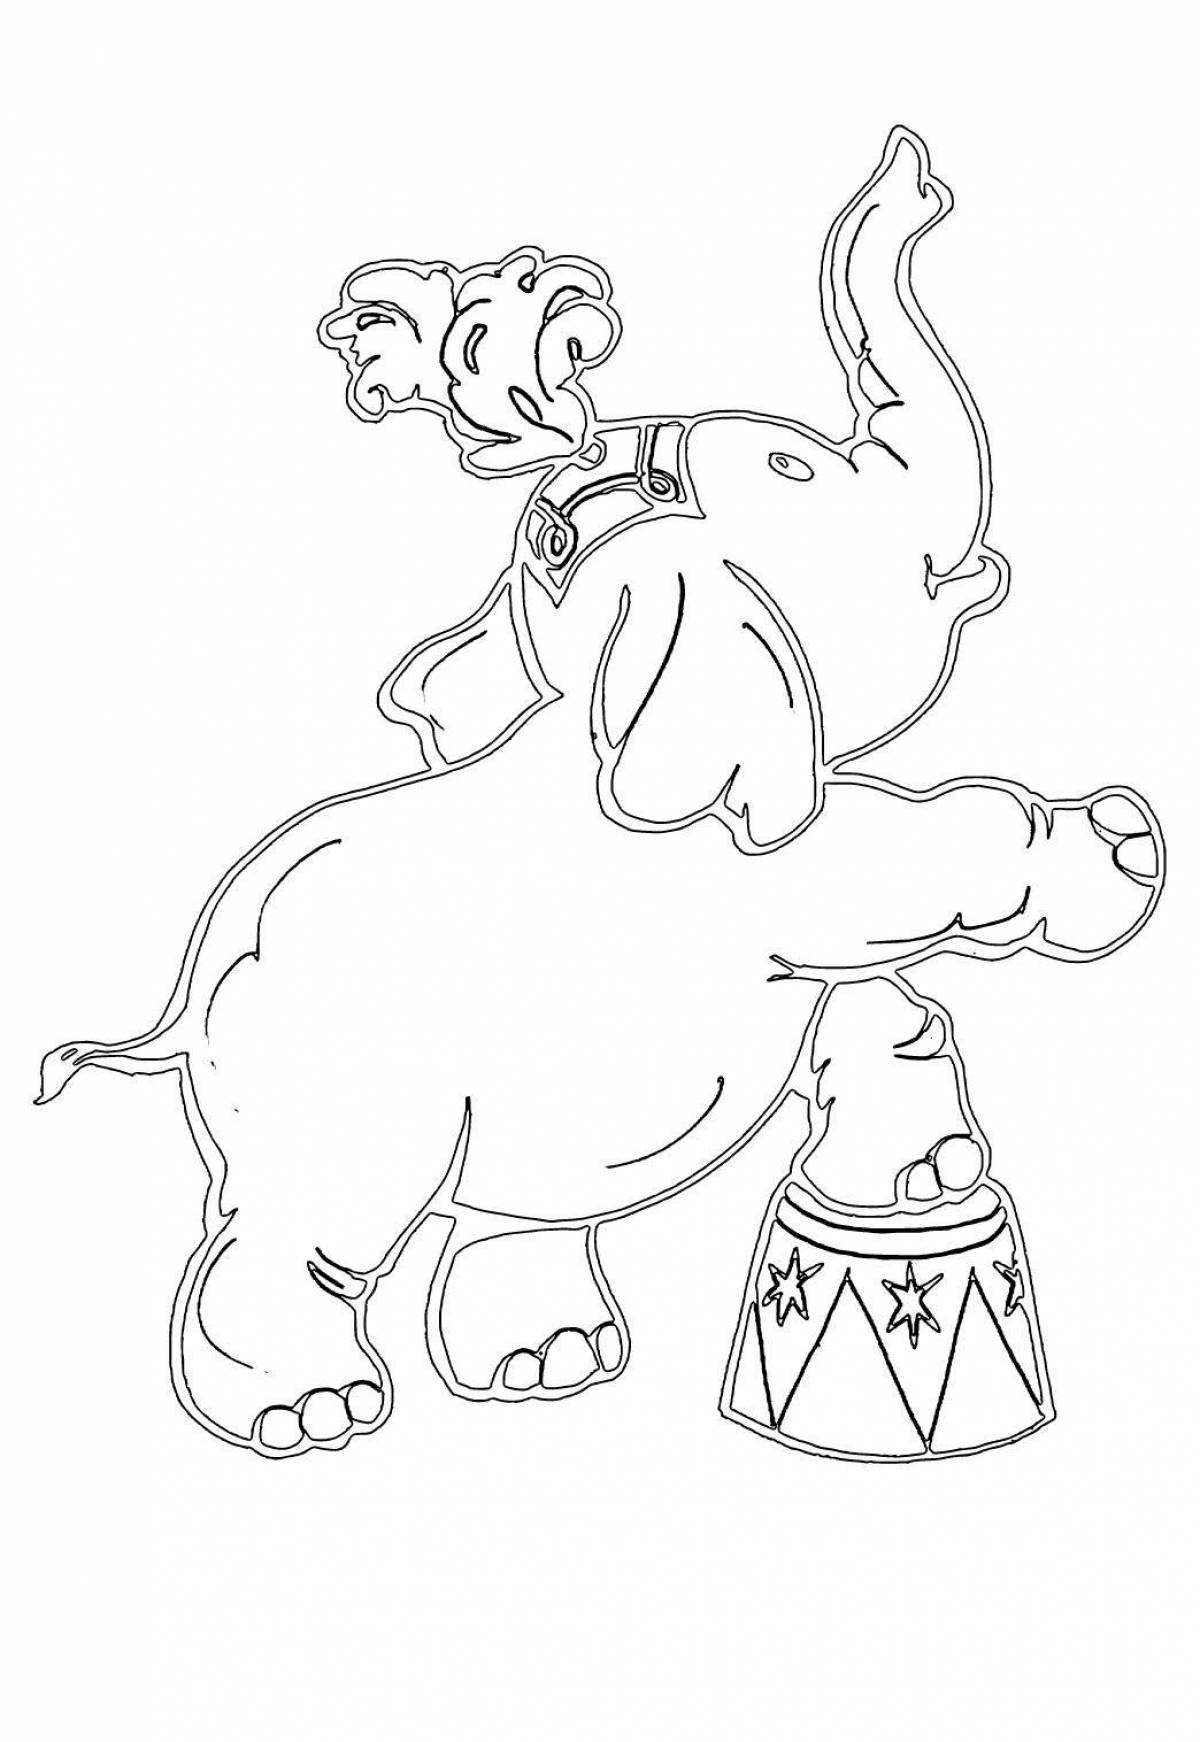 Coloring page joyful circus elephant